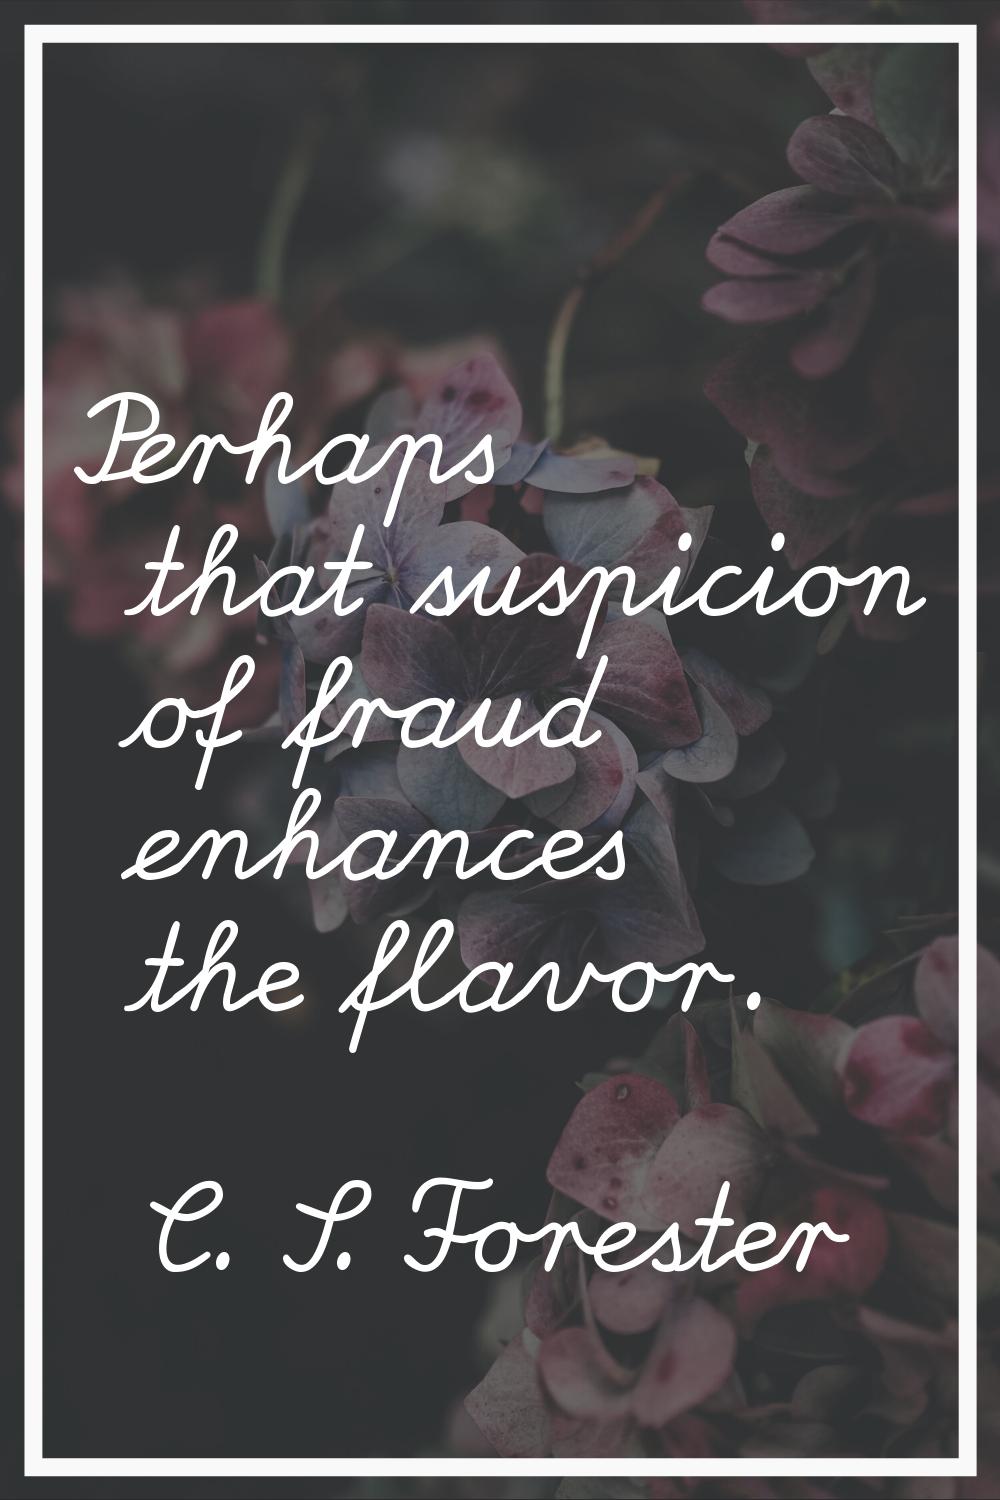 Perhaps that suspicion of fraud enhances the flavor.